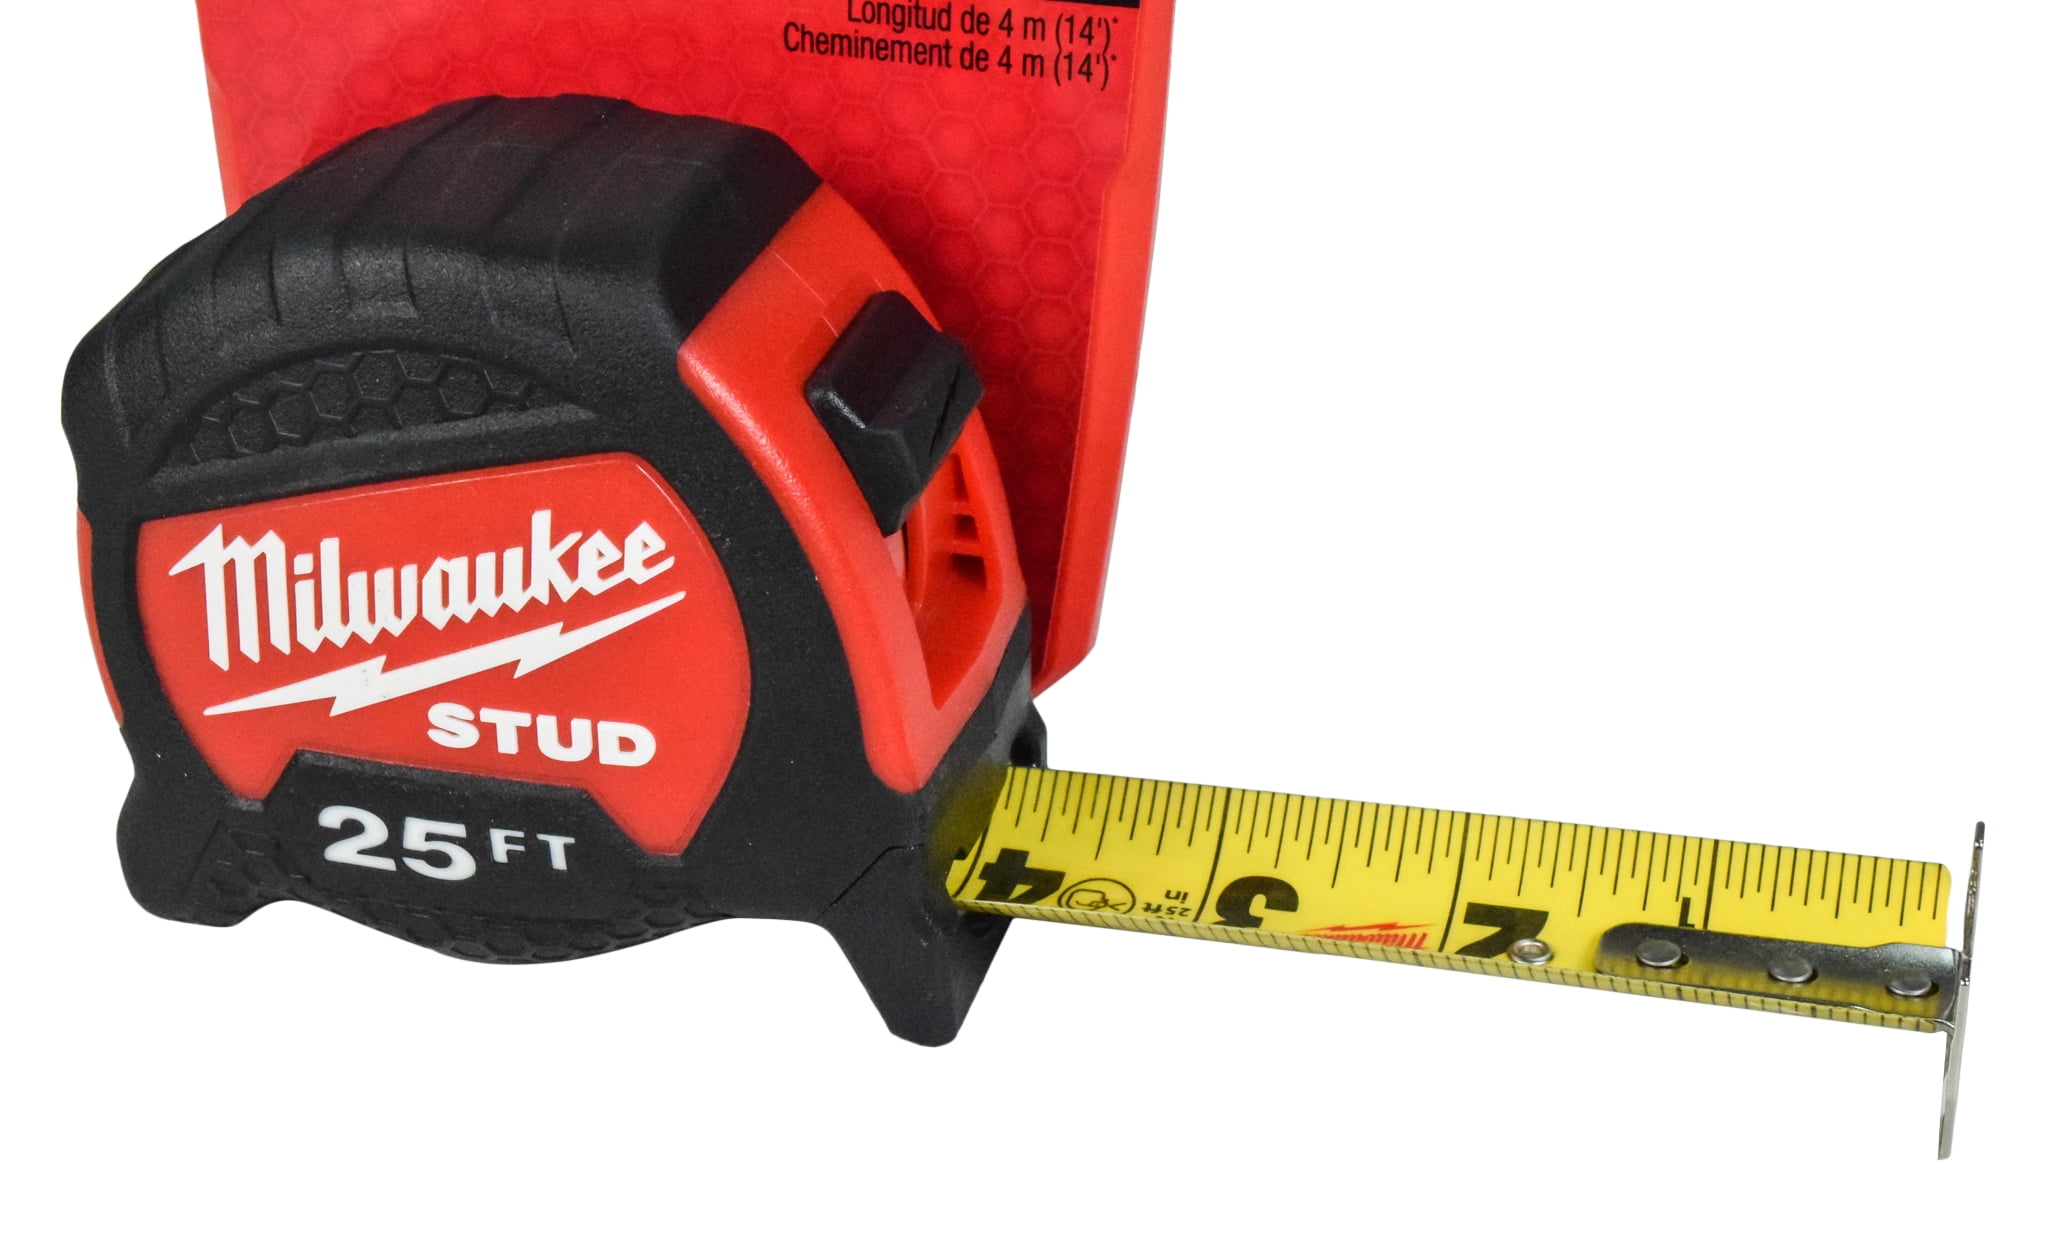 Milwaukee Stud Gen II 25' Durable Tape Measure 48-22-9725